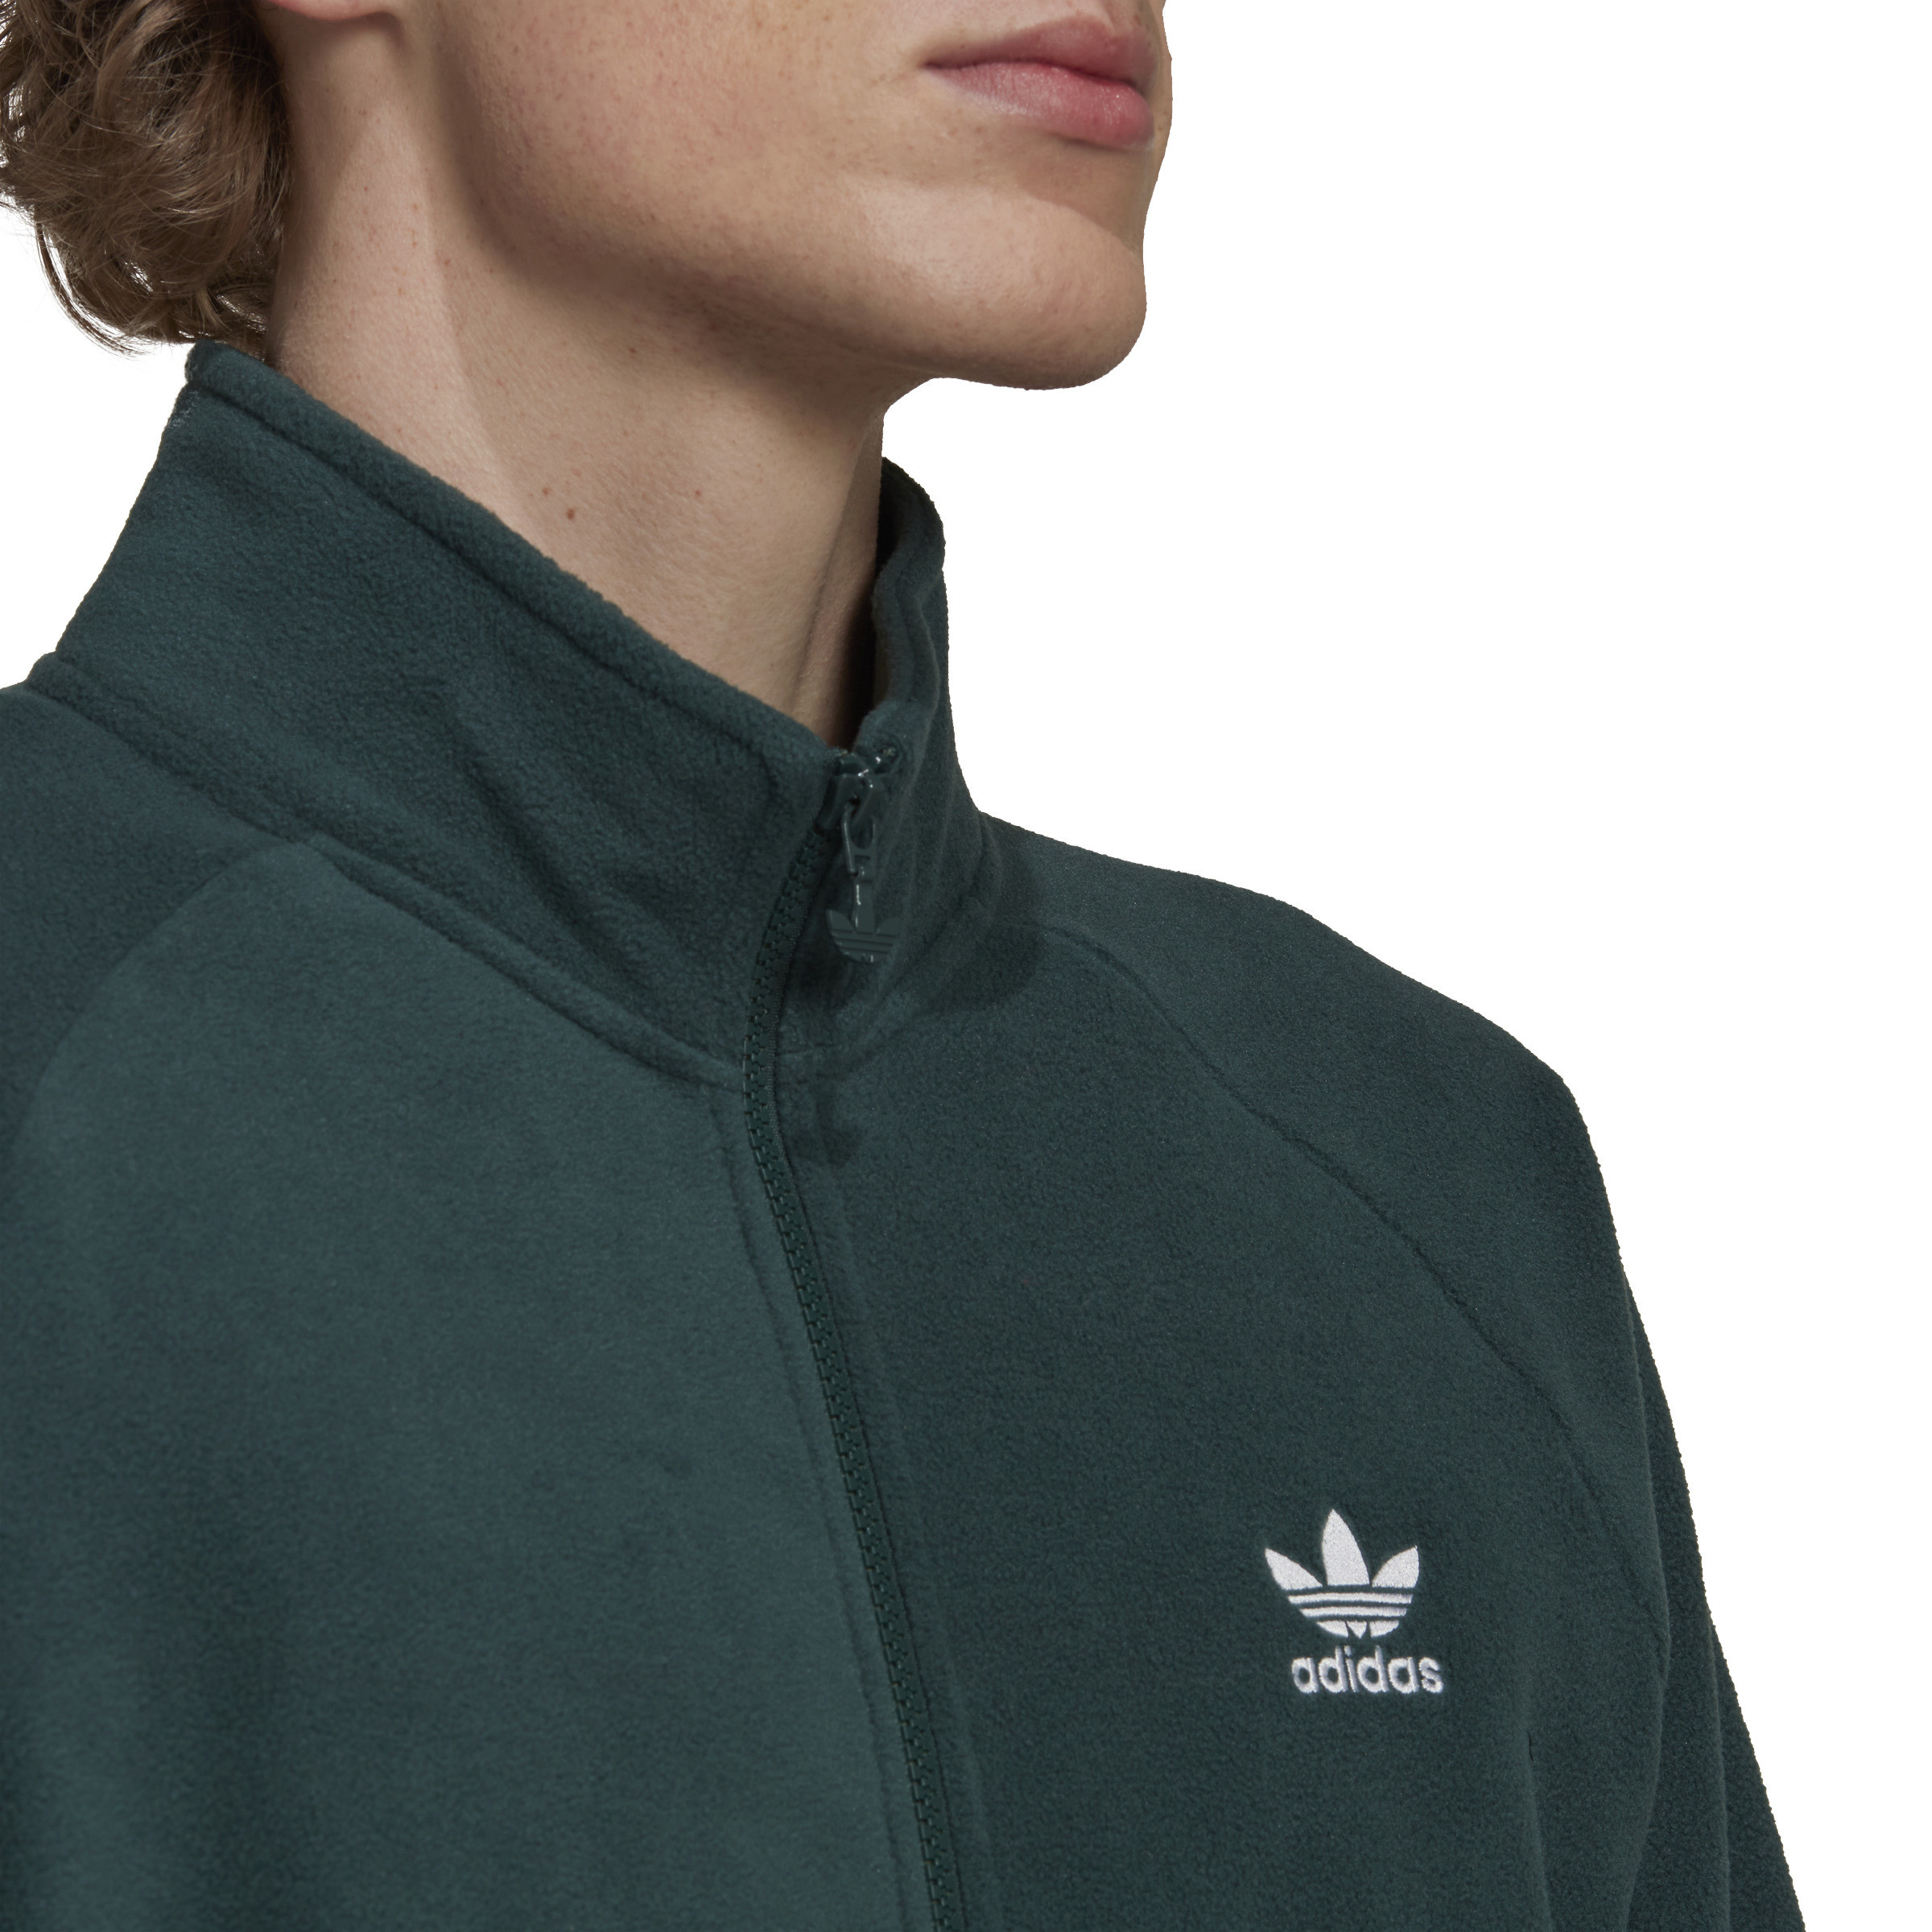 Adidas - Adicolor Classics Trefoil Fleece Jacket, Dark Green, large image number 5